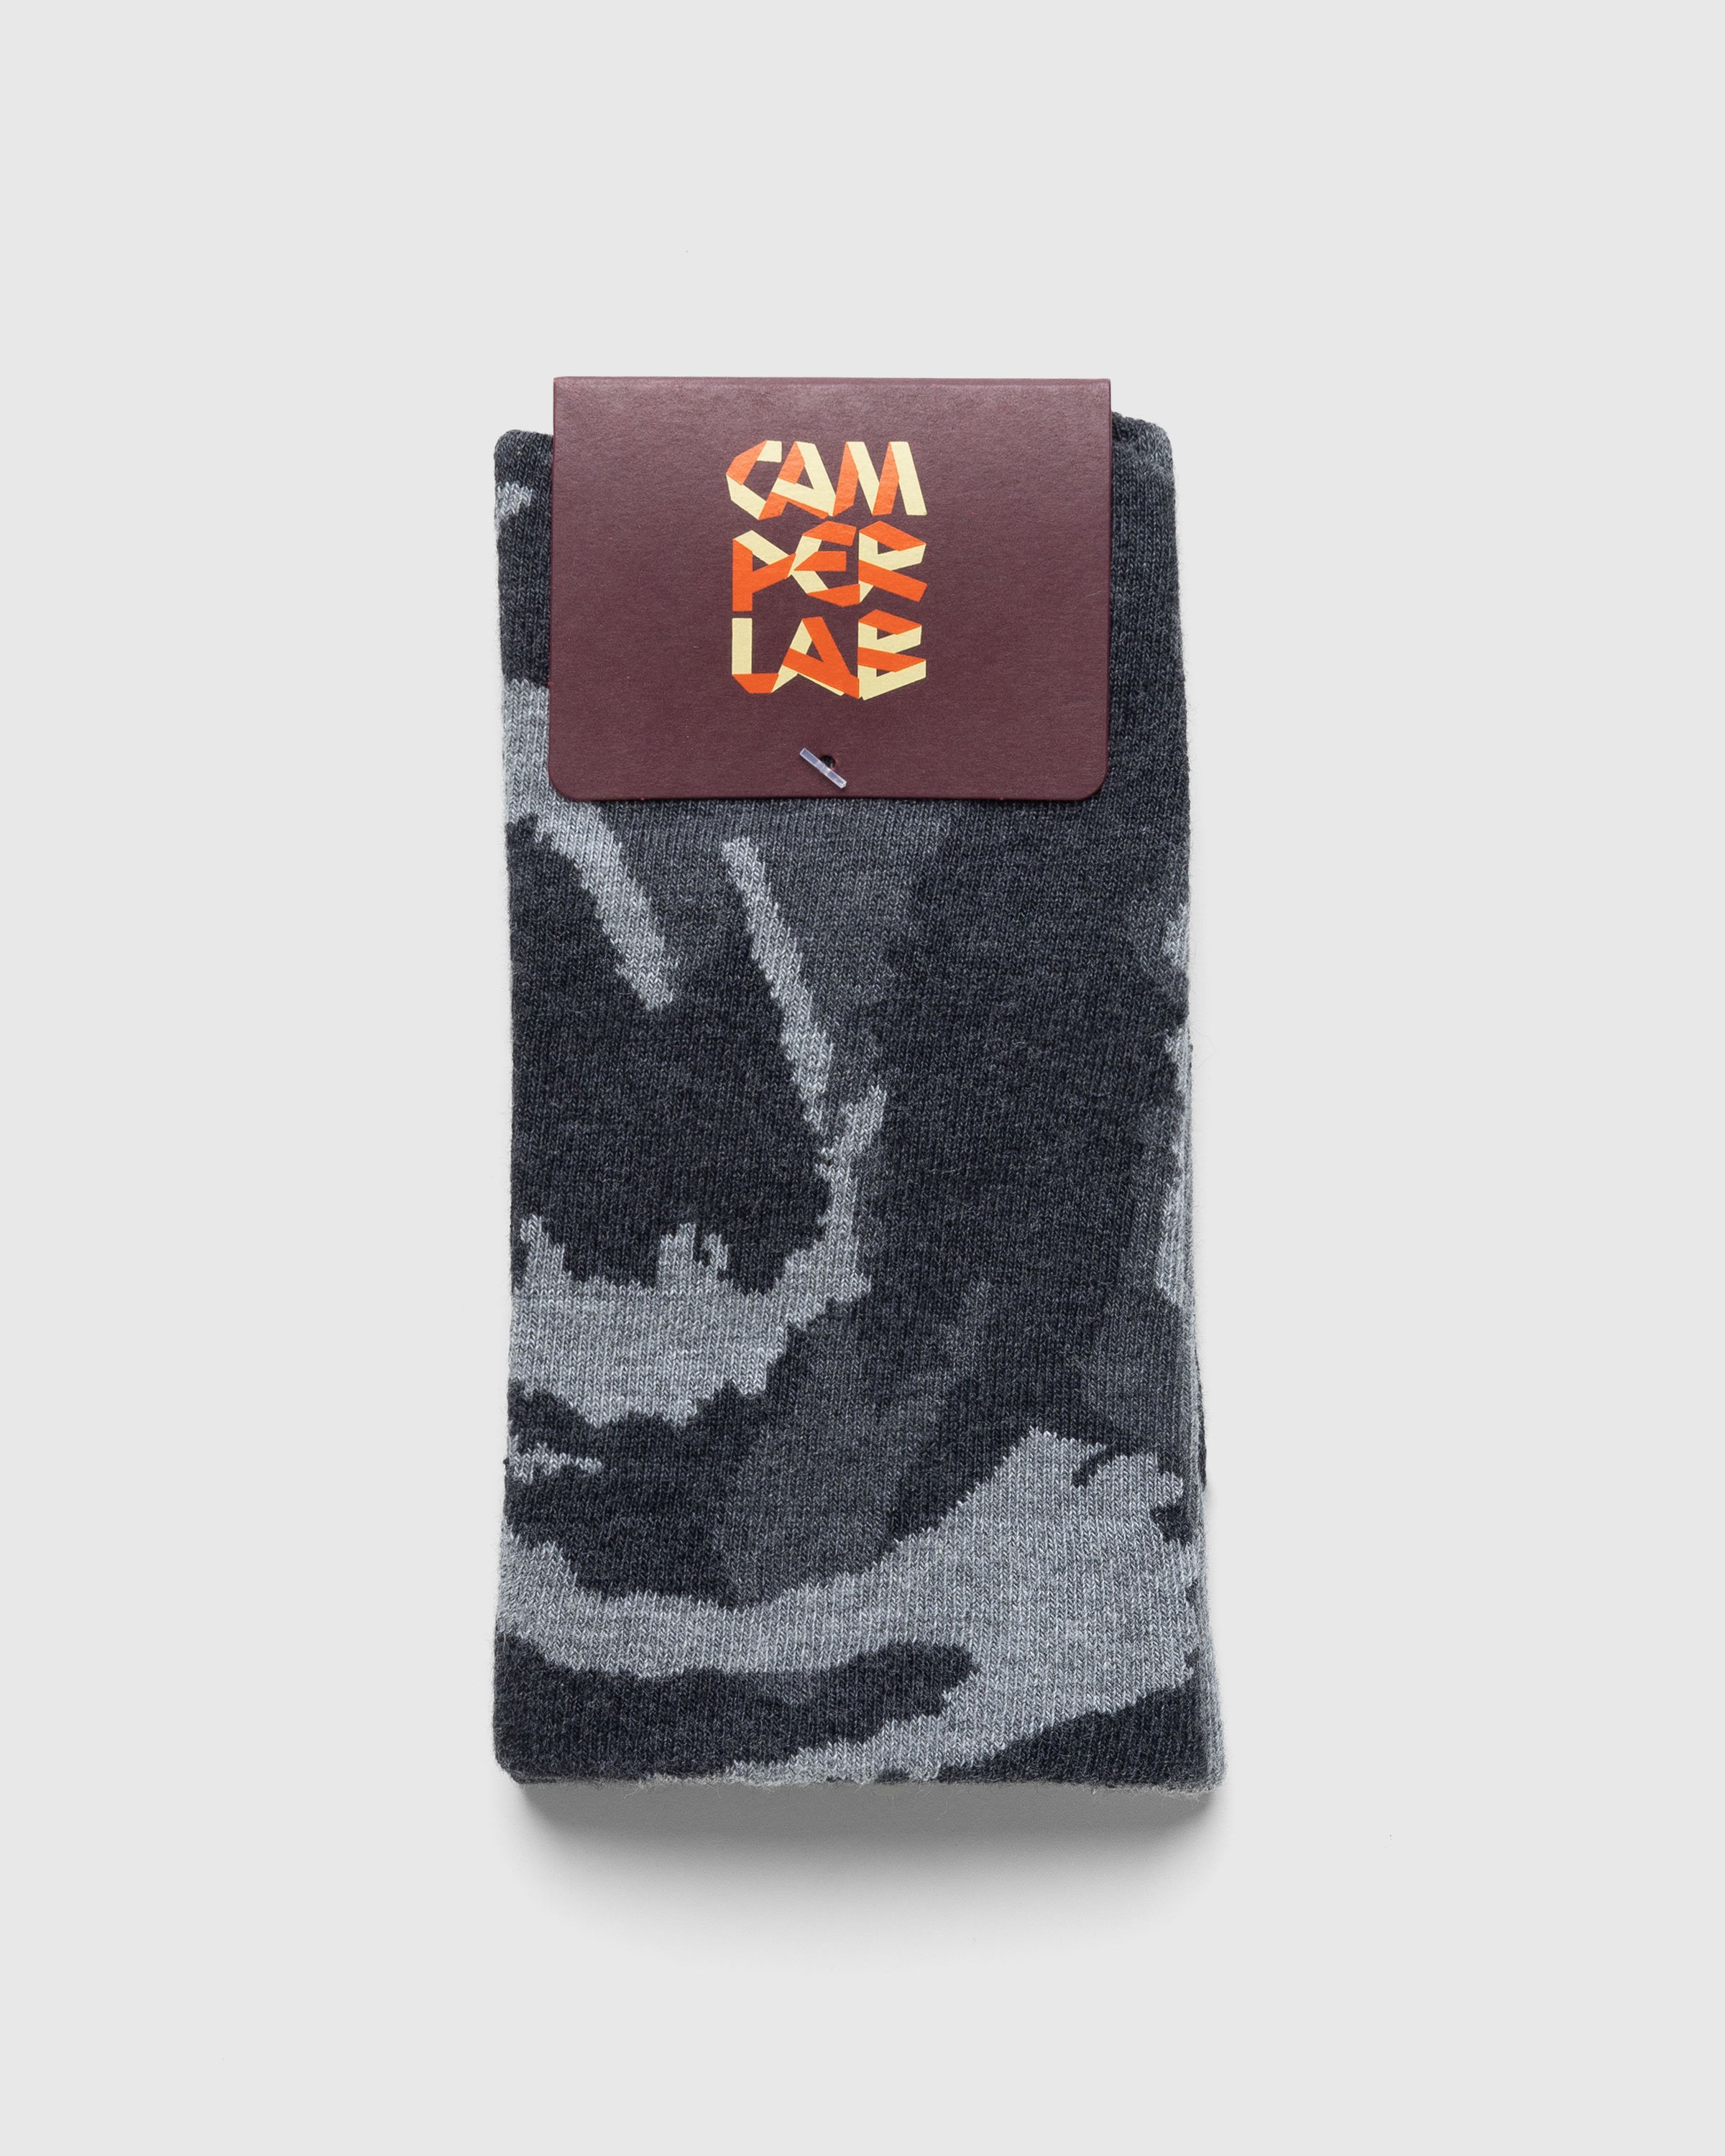 CAMPERLAB - Socks - Accessories - Multi - Image 2